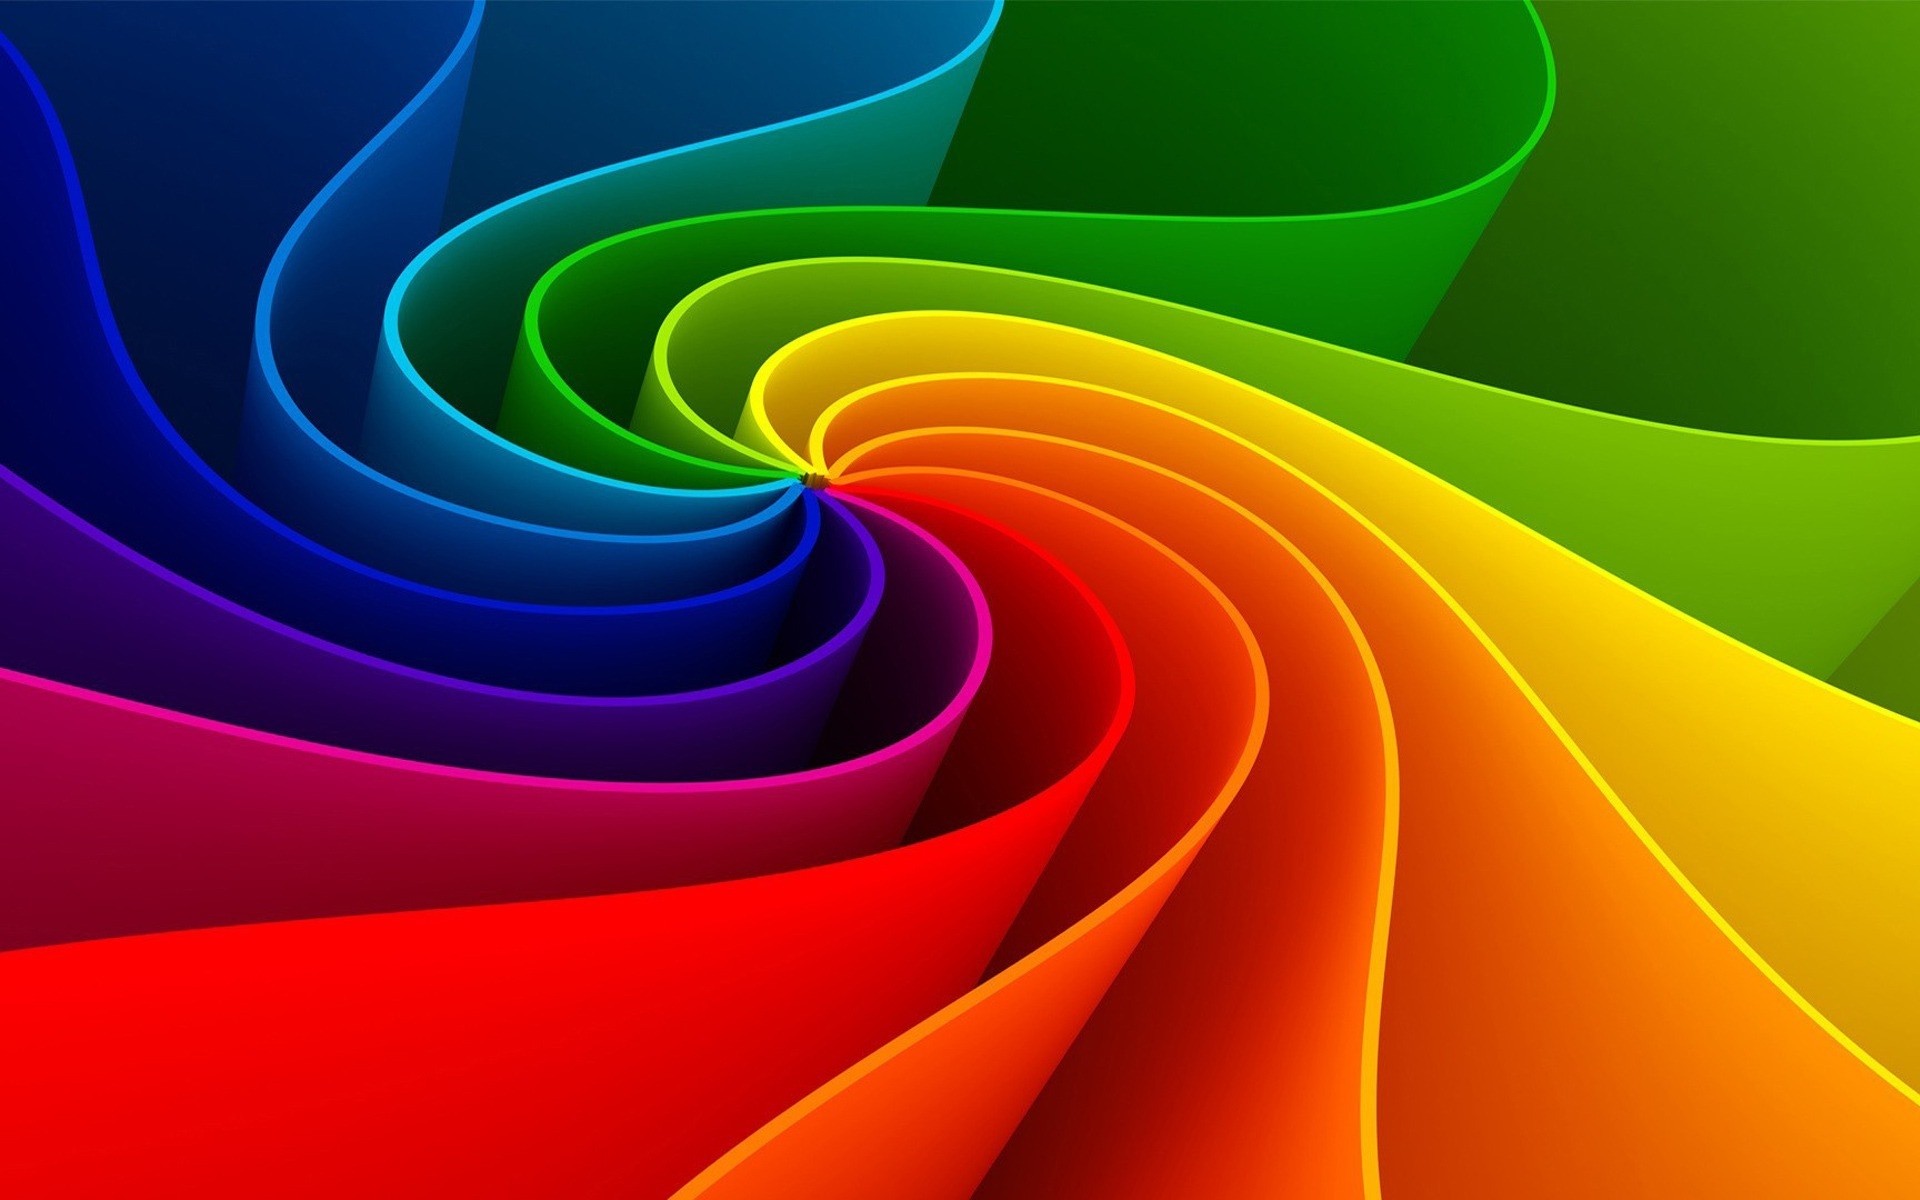 abstract color desktop curve illustration wave design shape wallpaper graphic texture pattern art